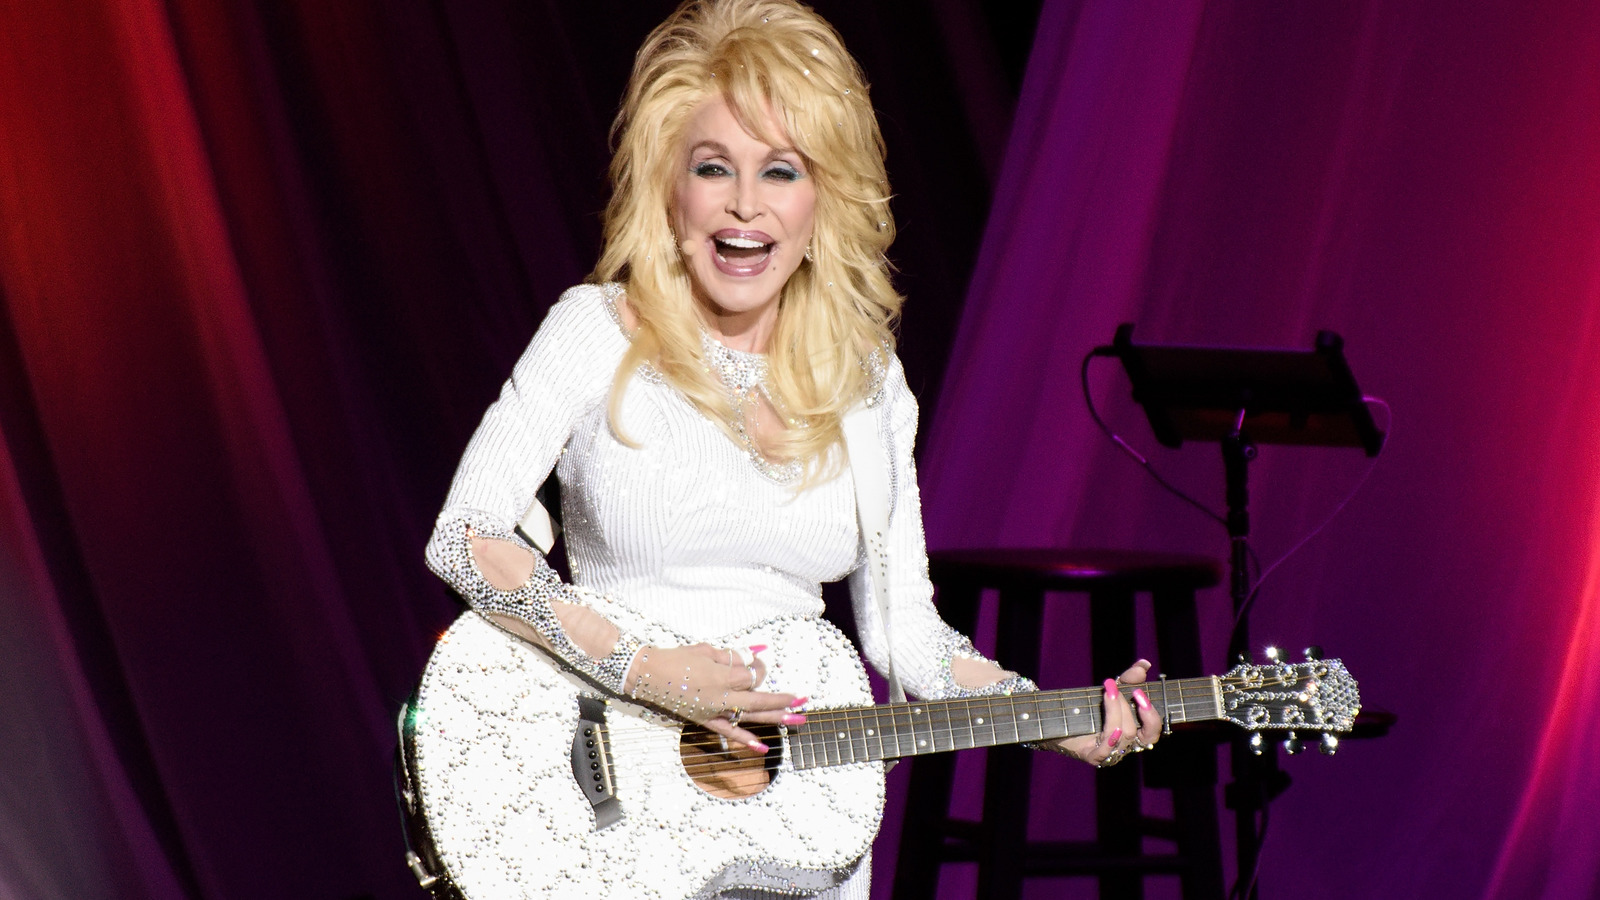 Is Dolly Parton Still Alive